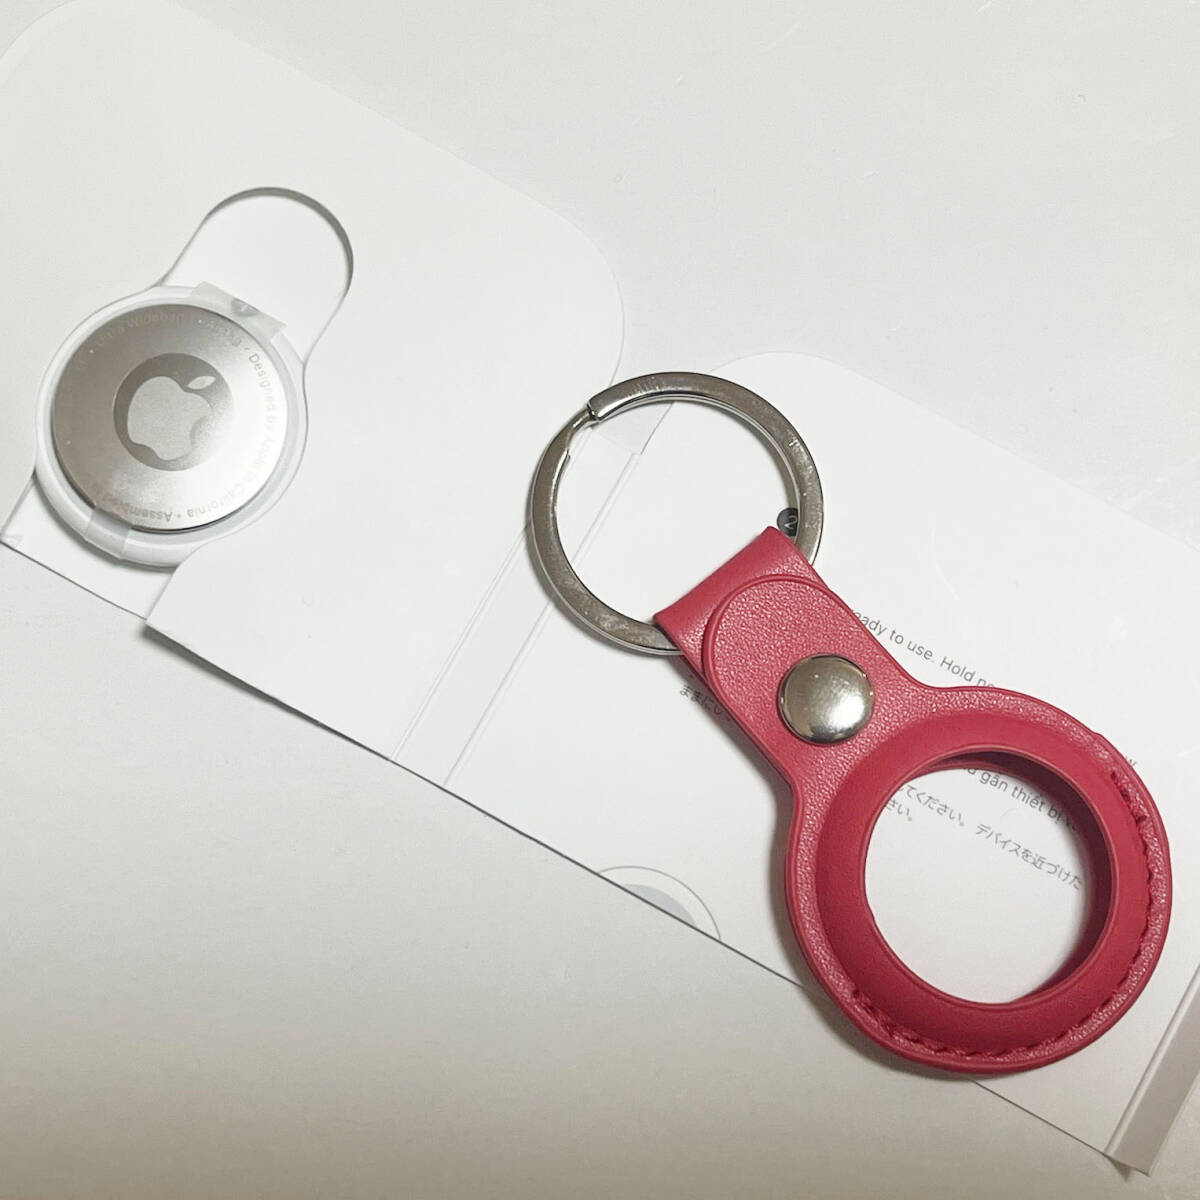 Apple AirTag本体(アップル製)＋ケース(サードパーティー製)革製・赤